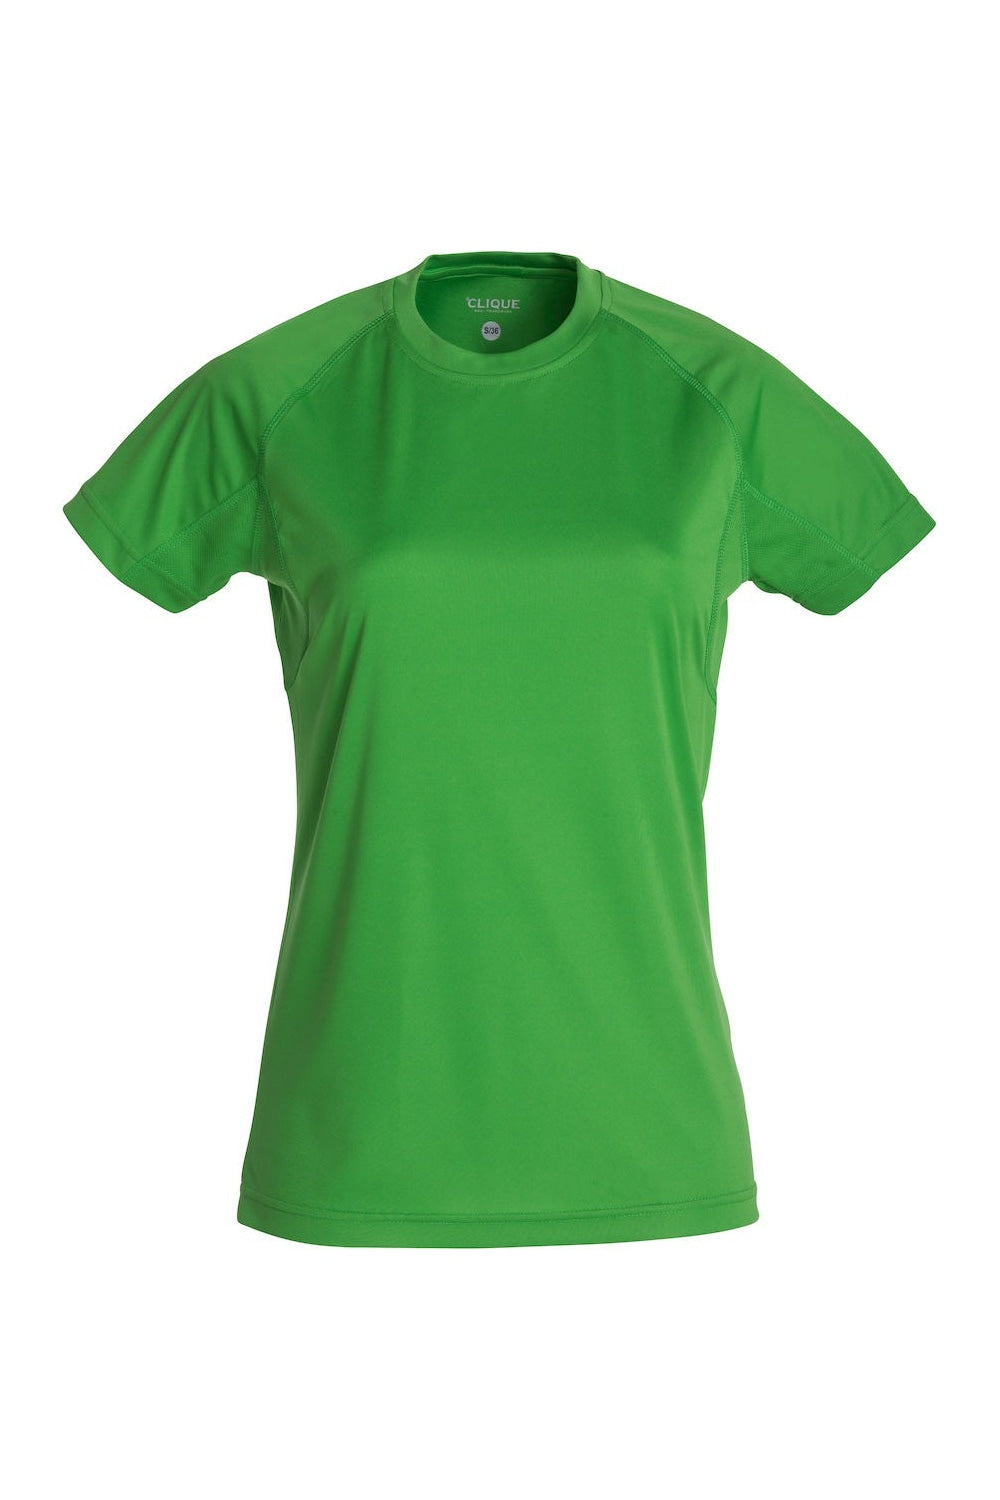 Womens/Ladies Premium Active T-Shirt - Apple Green